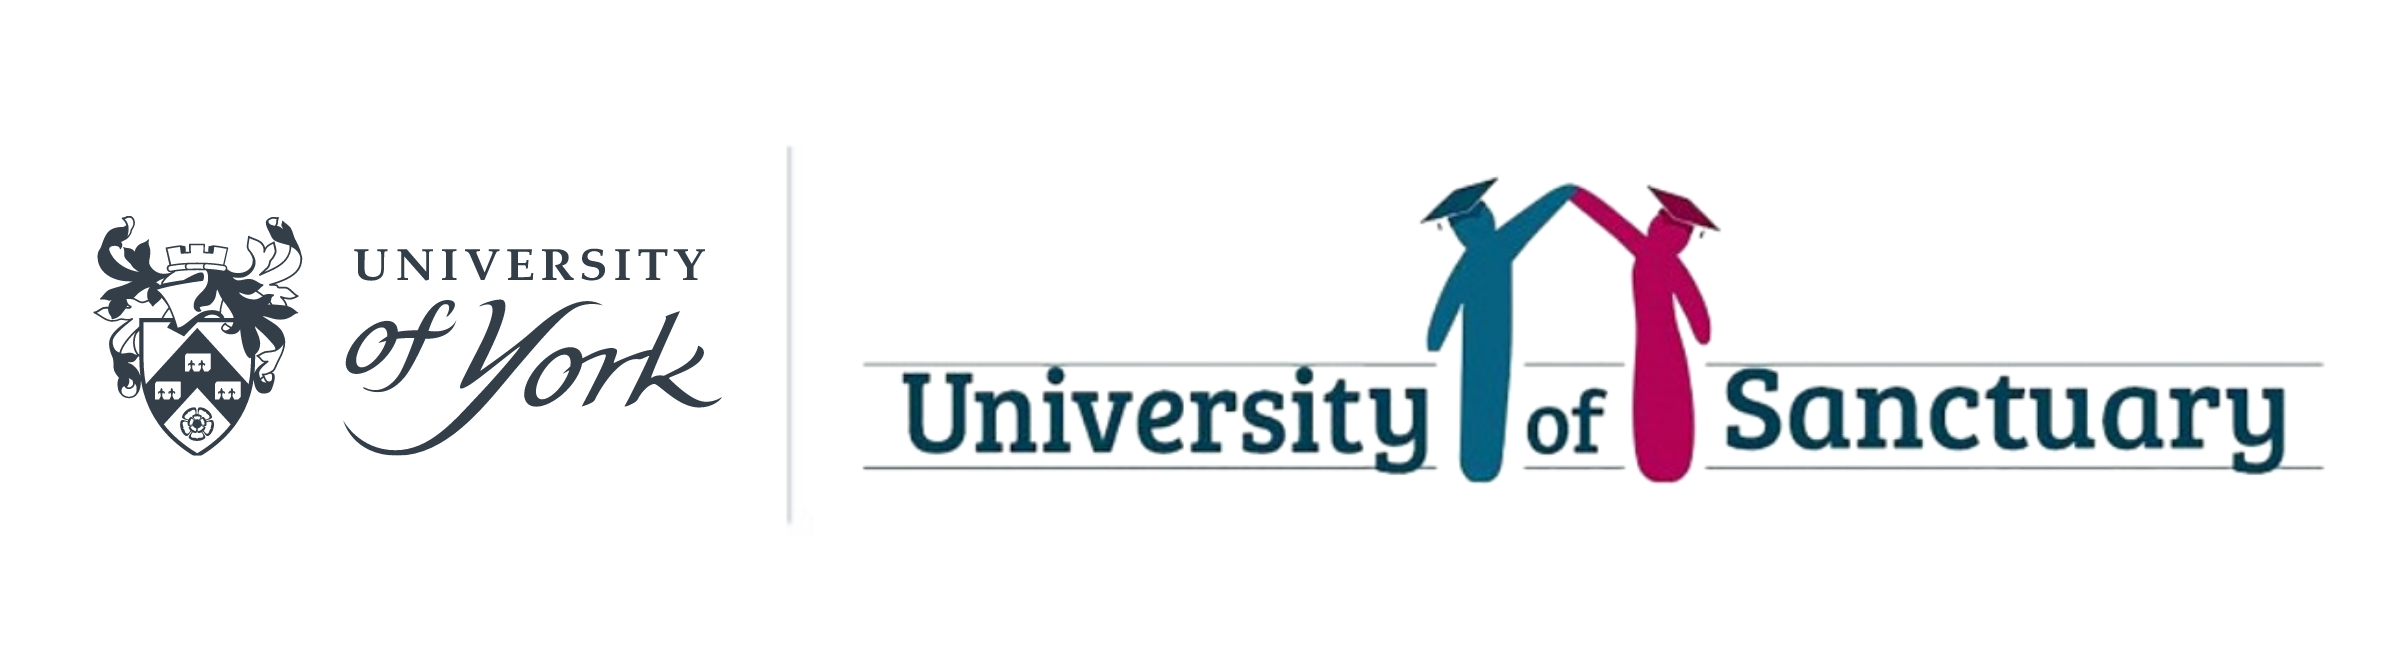 University of Sanctuary logo